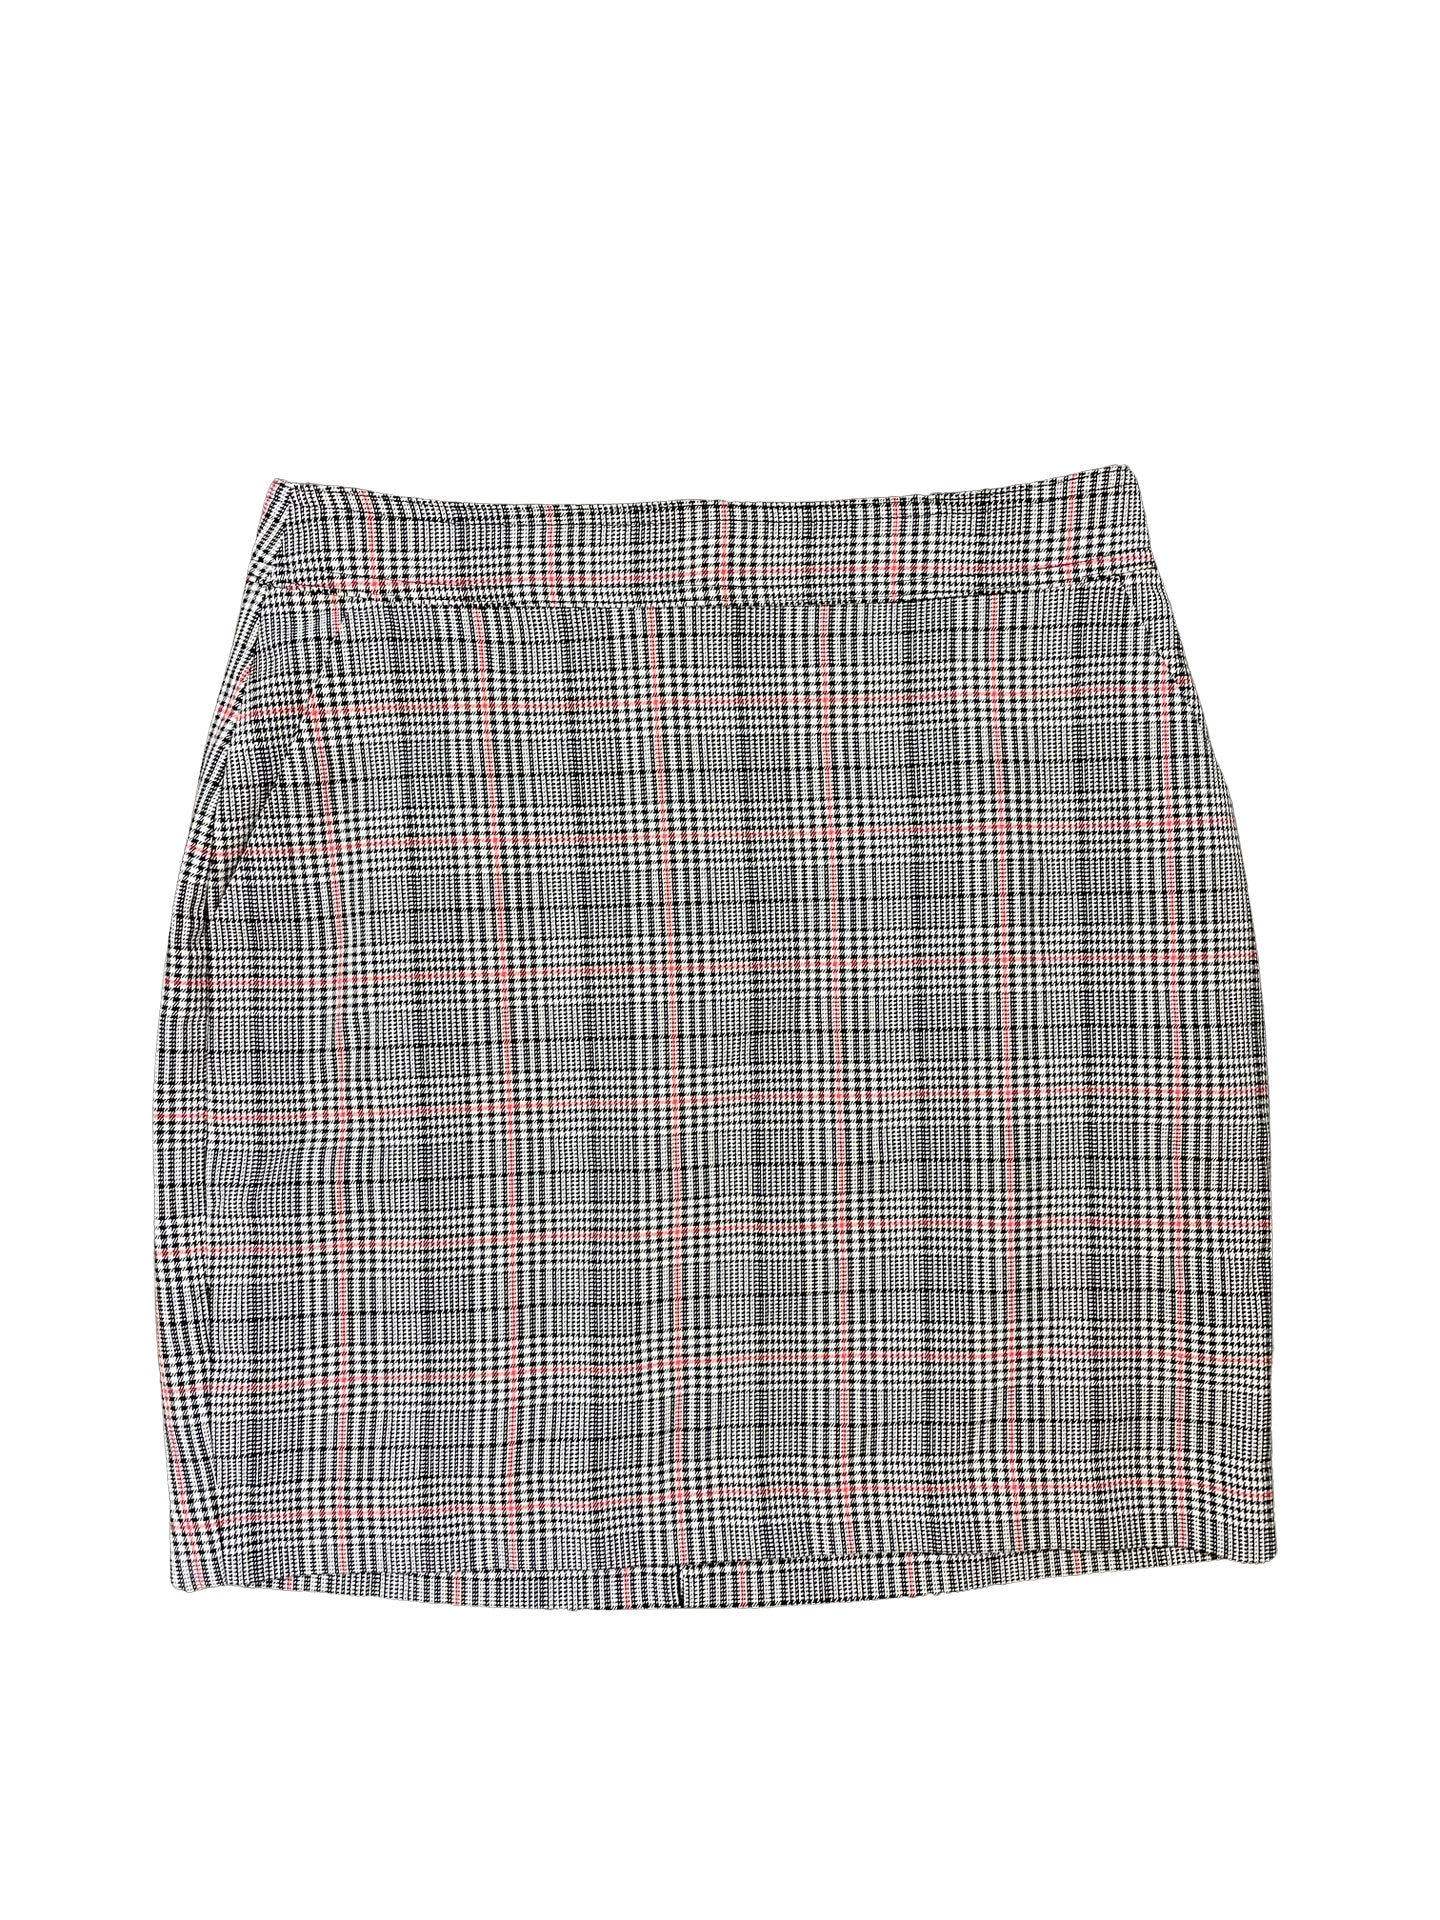 Size 4 Gap Skirt